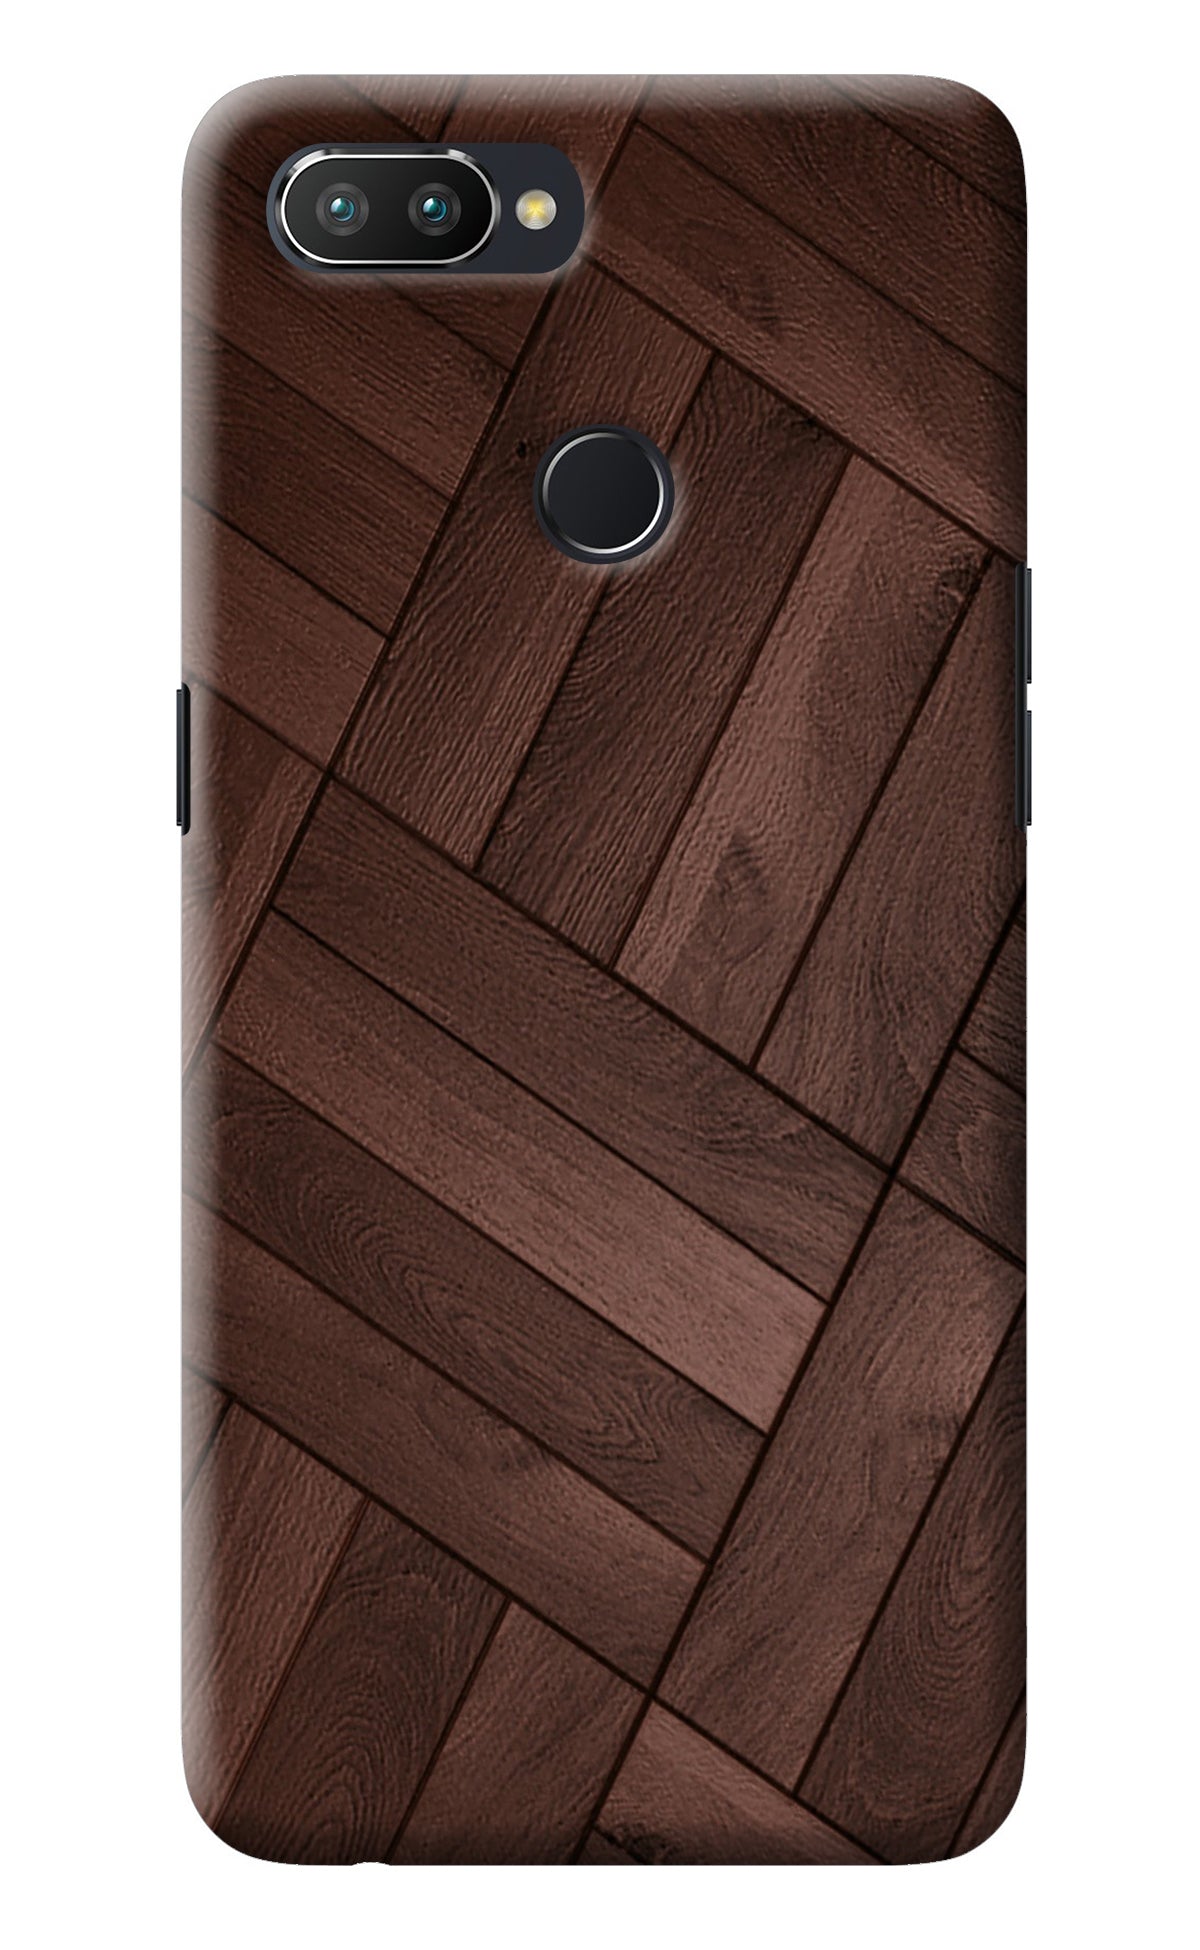 Wooden Texture Design Realme U1 Back Cover